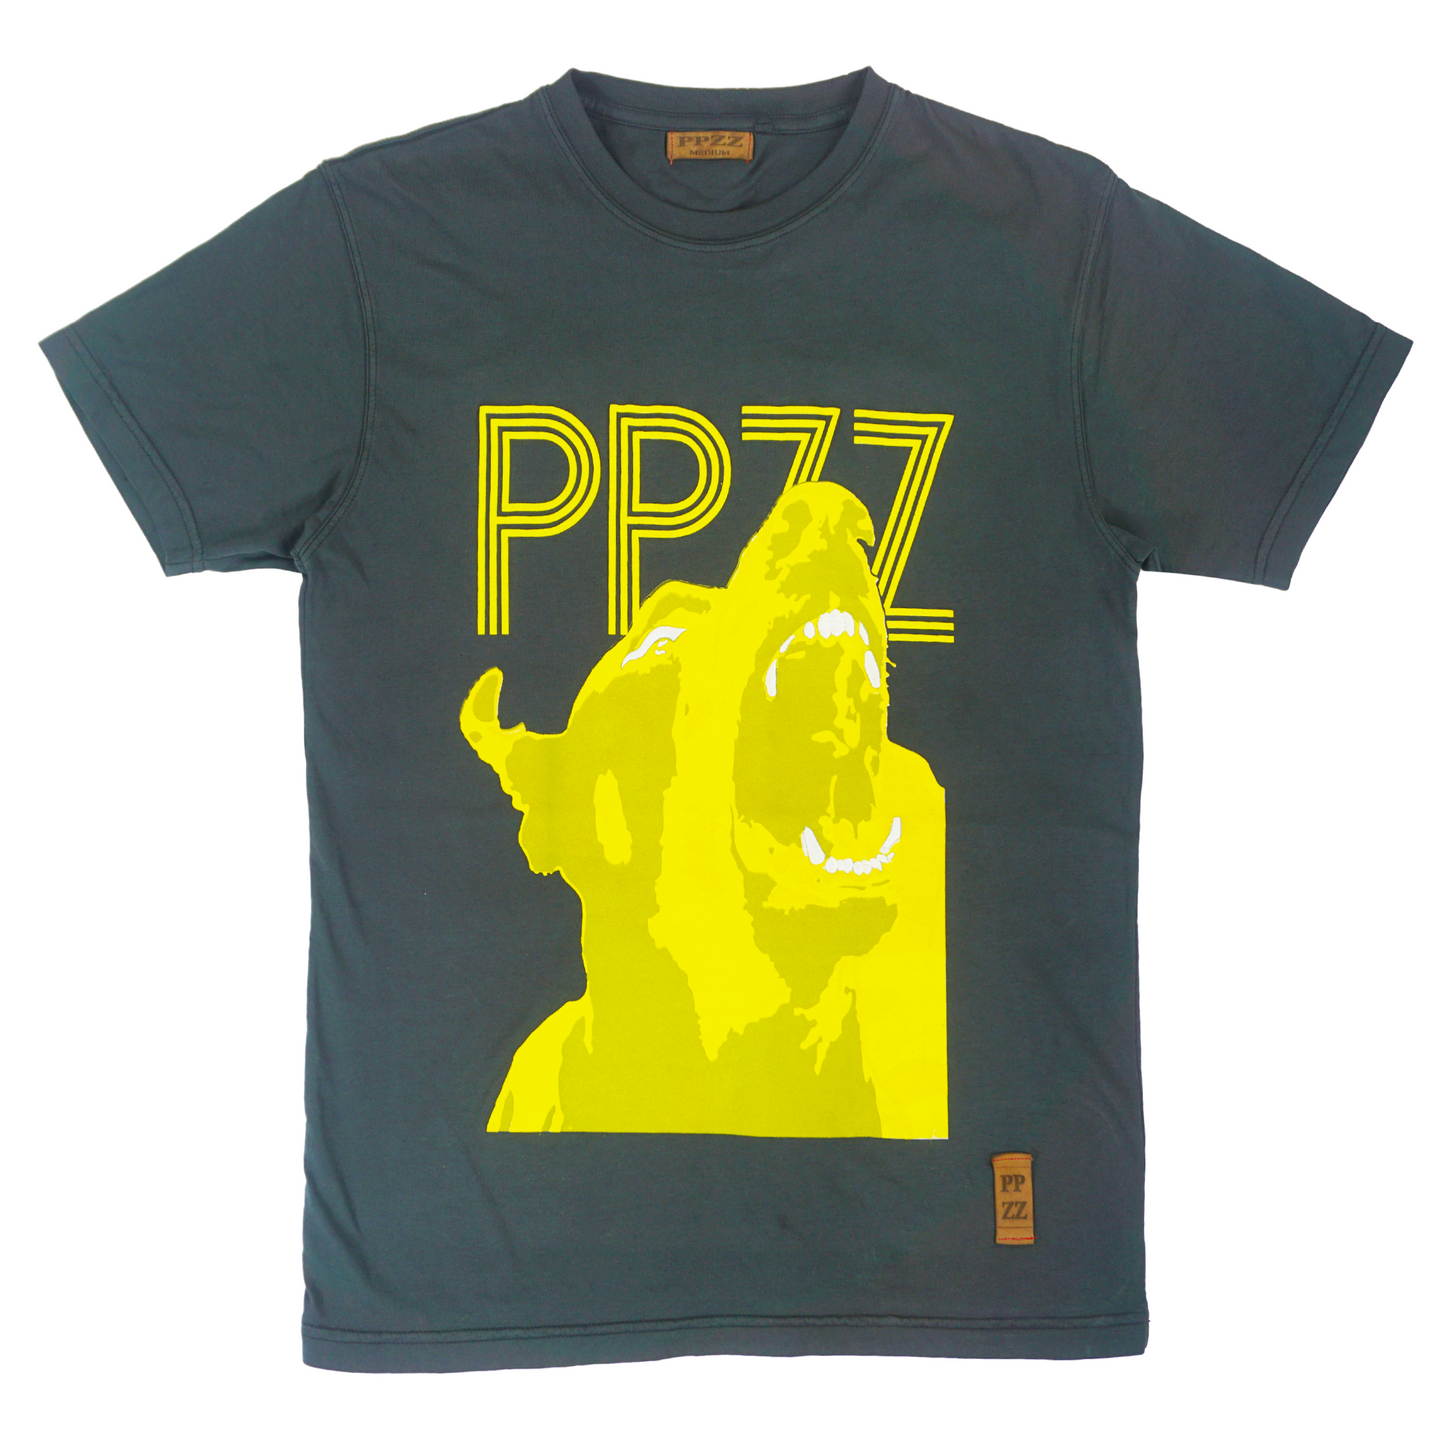 PPZZ Vicious K9 Garment Dyed Tee (Pirate Black/Yllw)  / D16